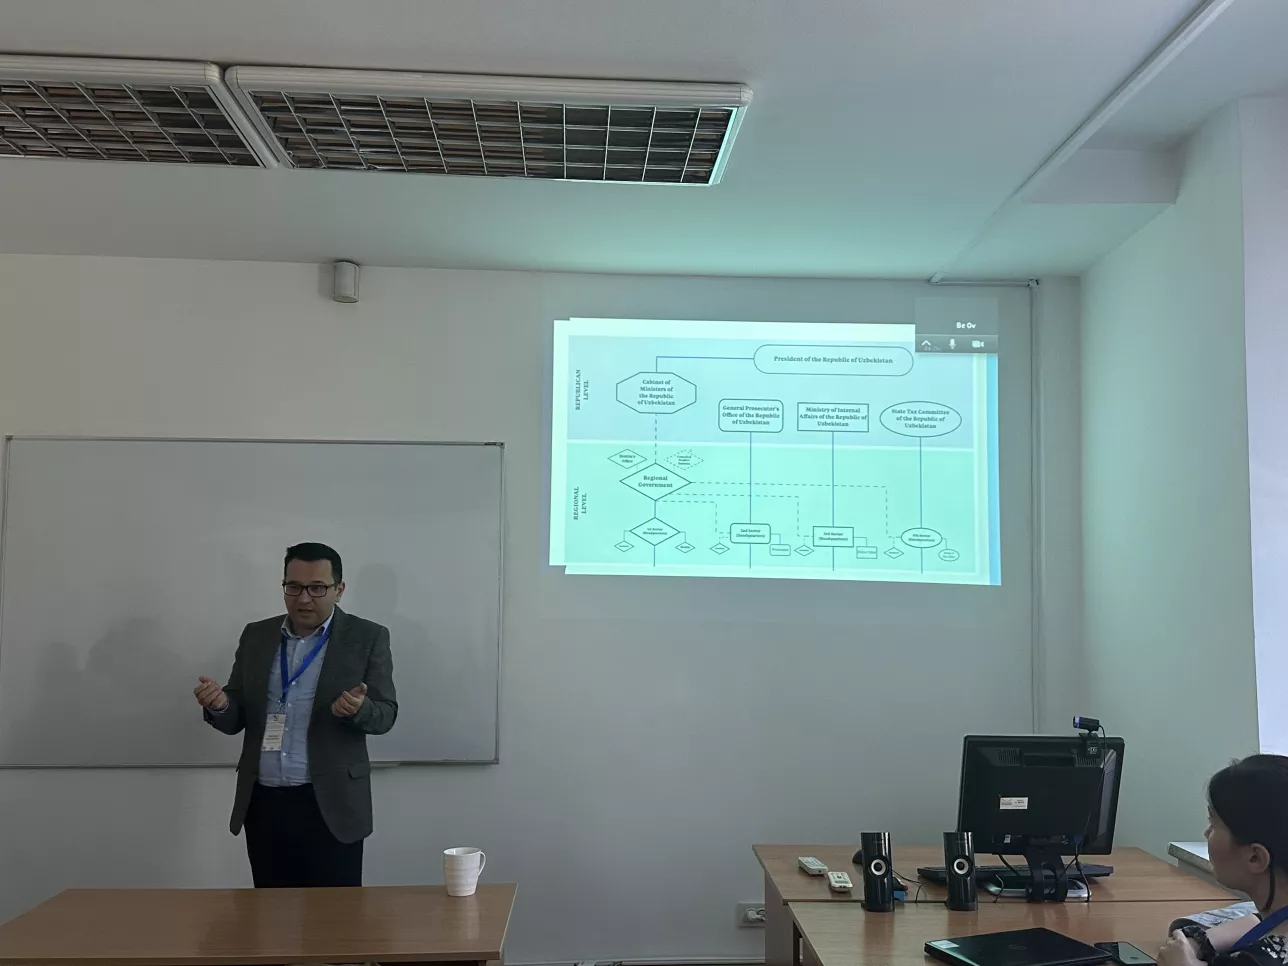 Rustam Urinboyev is presenting Claster system of Uzbekistan